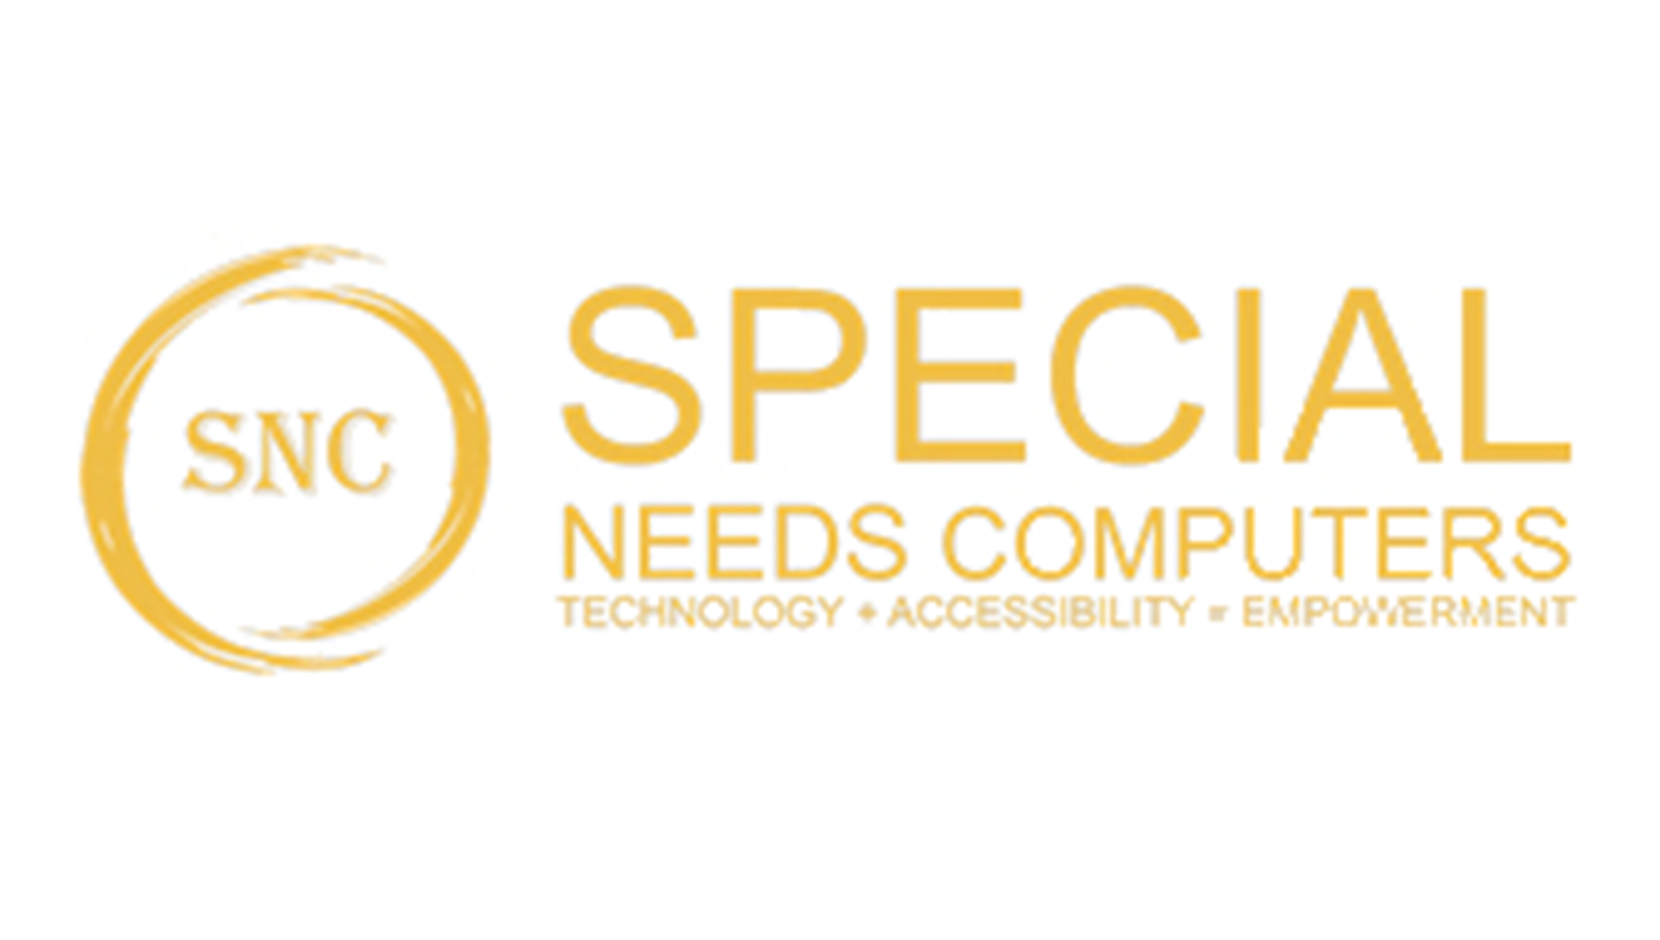 Special Needs Computers